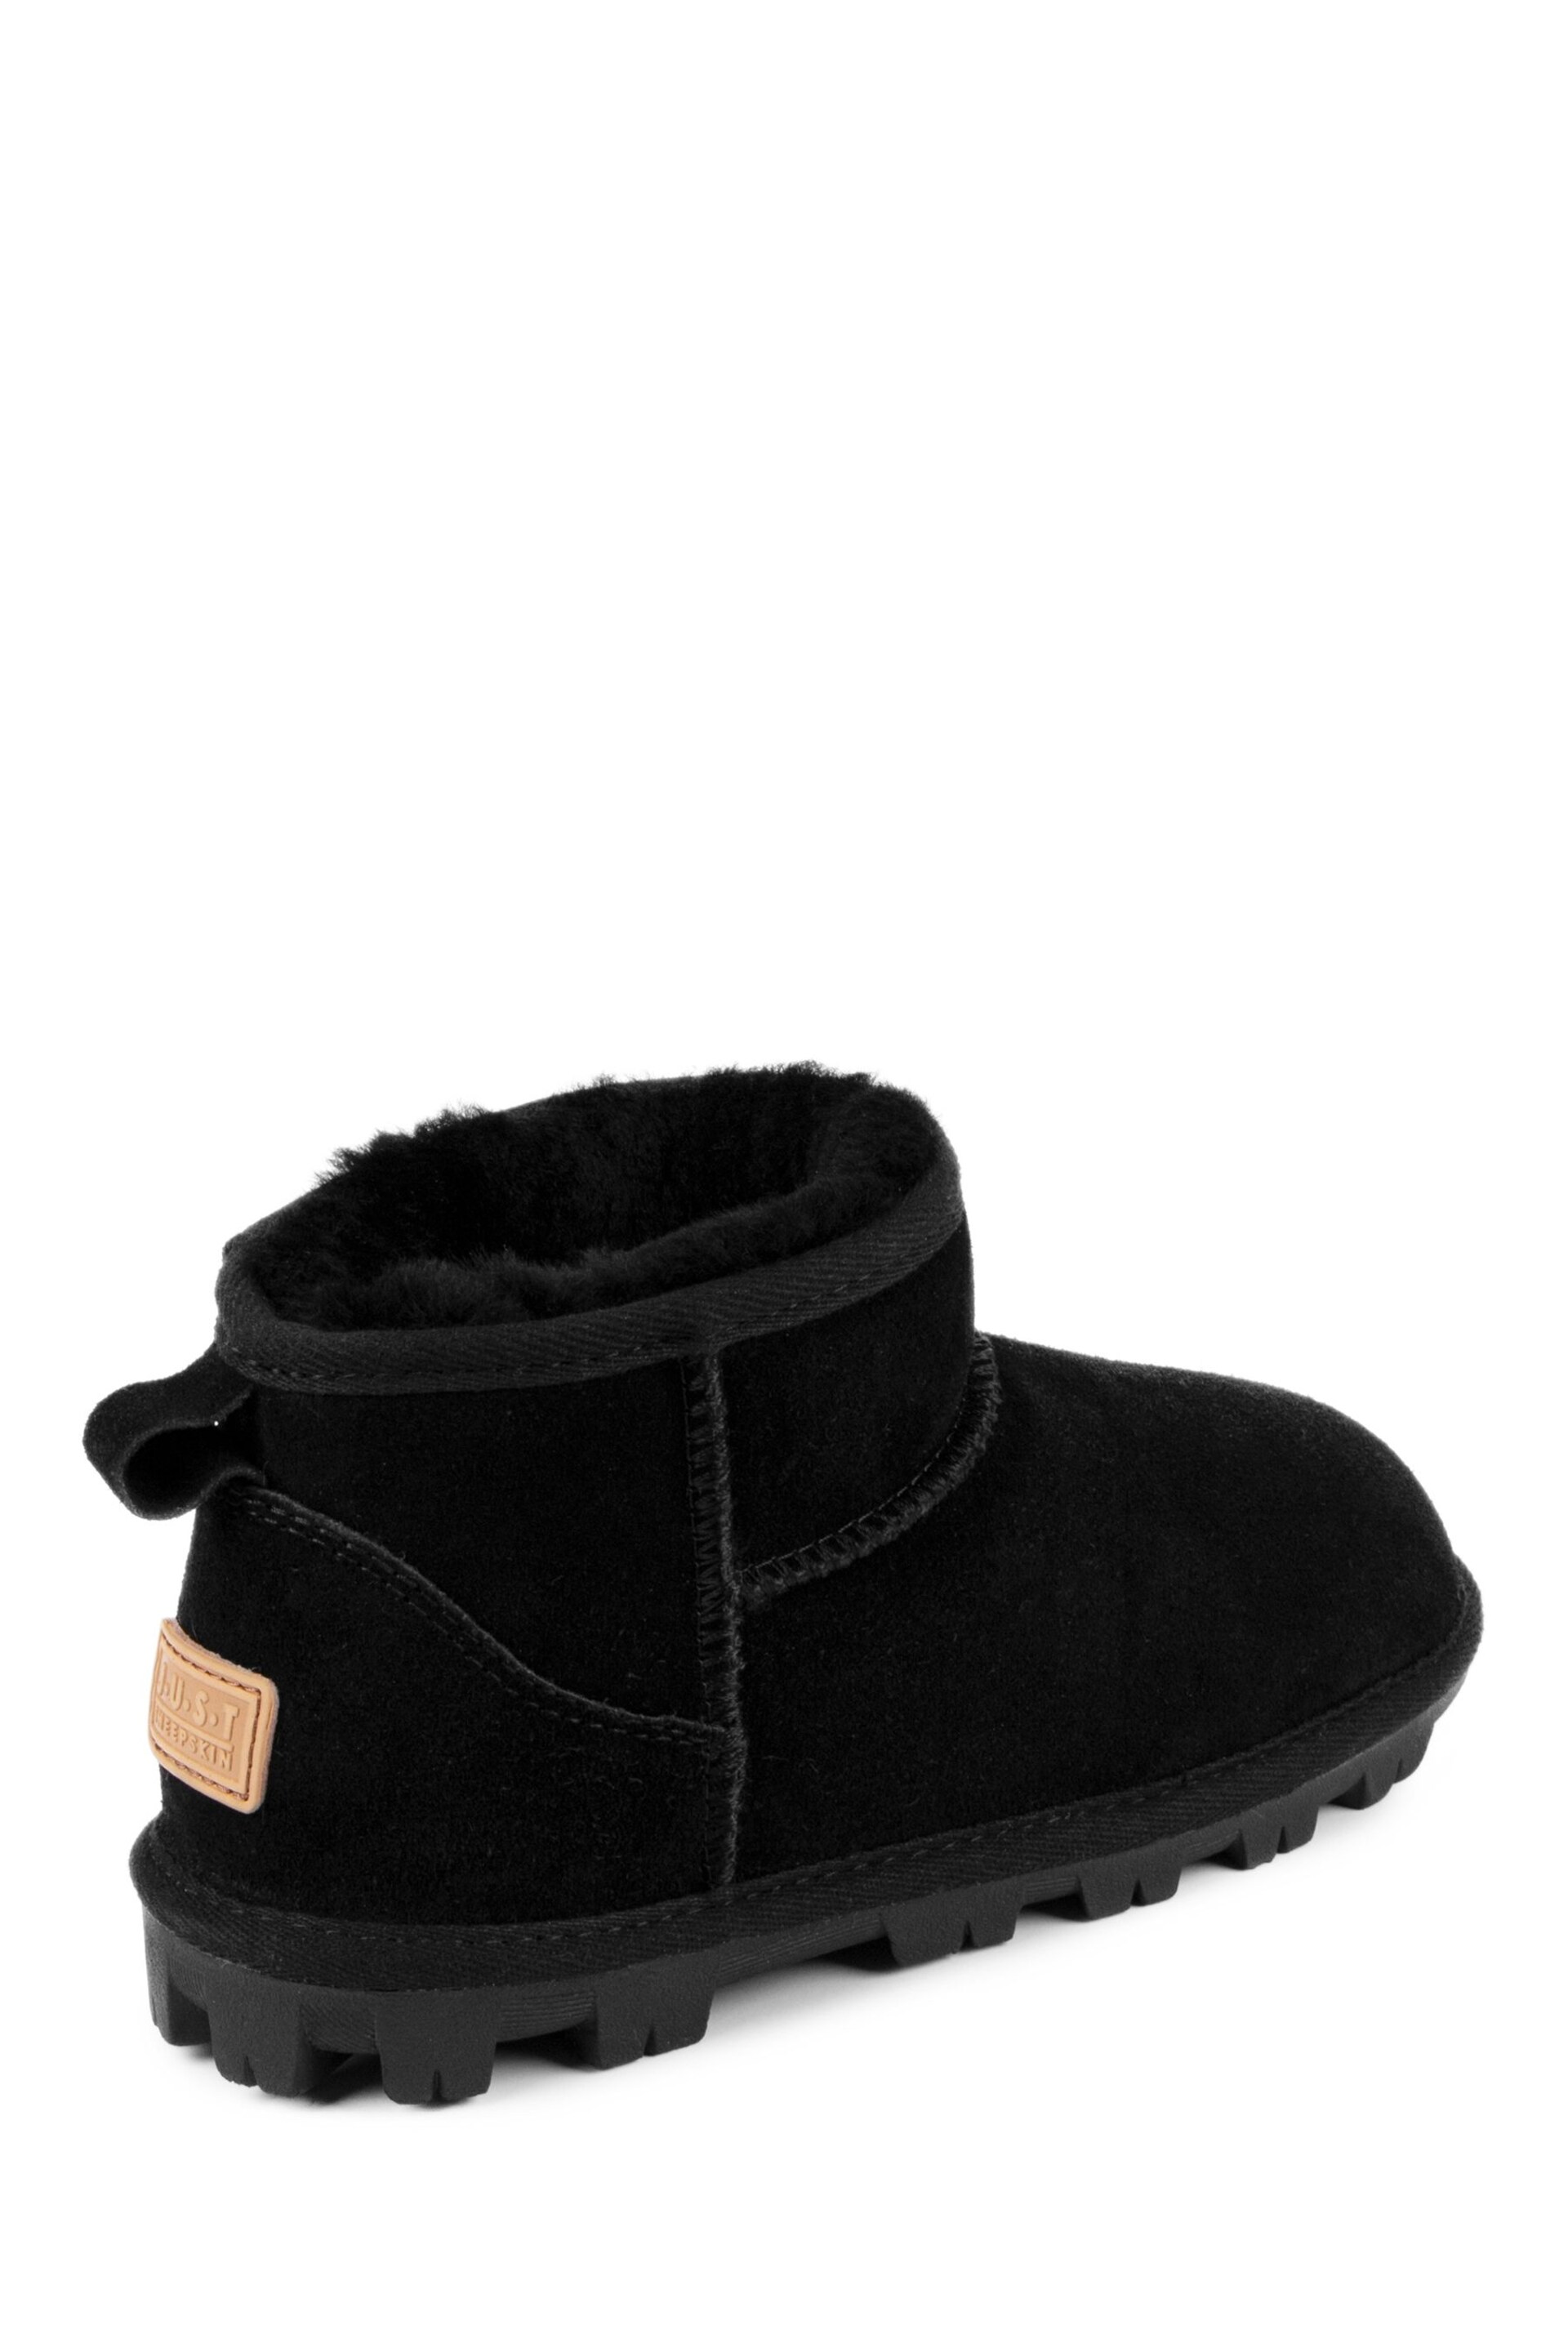 Just Sheepskin™ Black Ladies Mini Grace Sheepskin Boots - Image 4 of 5